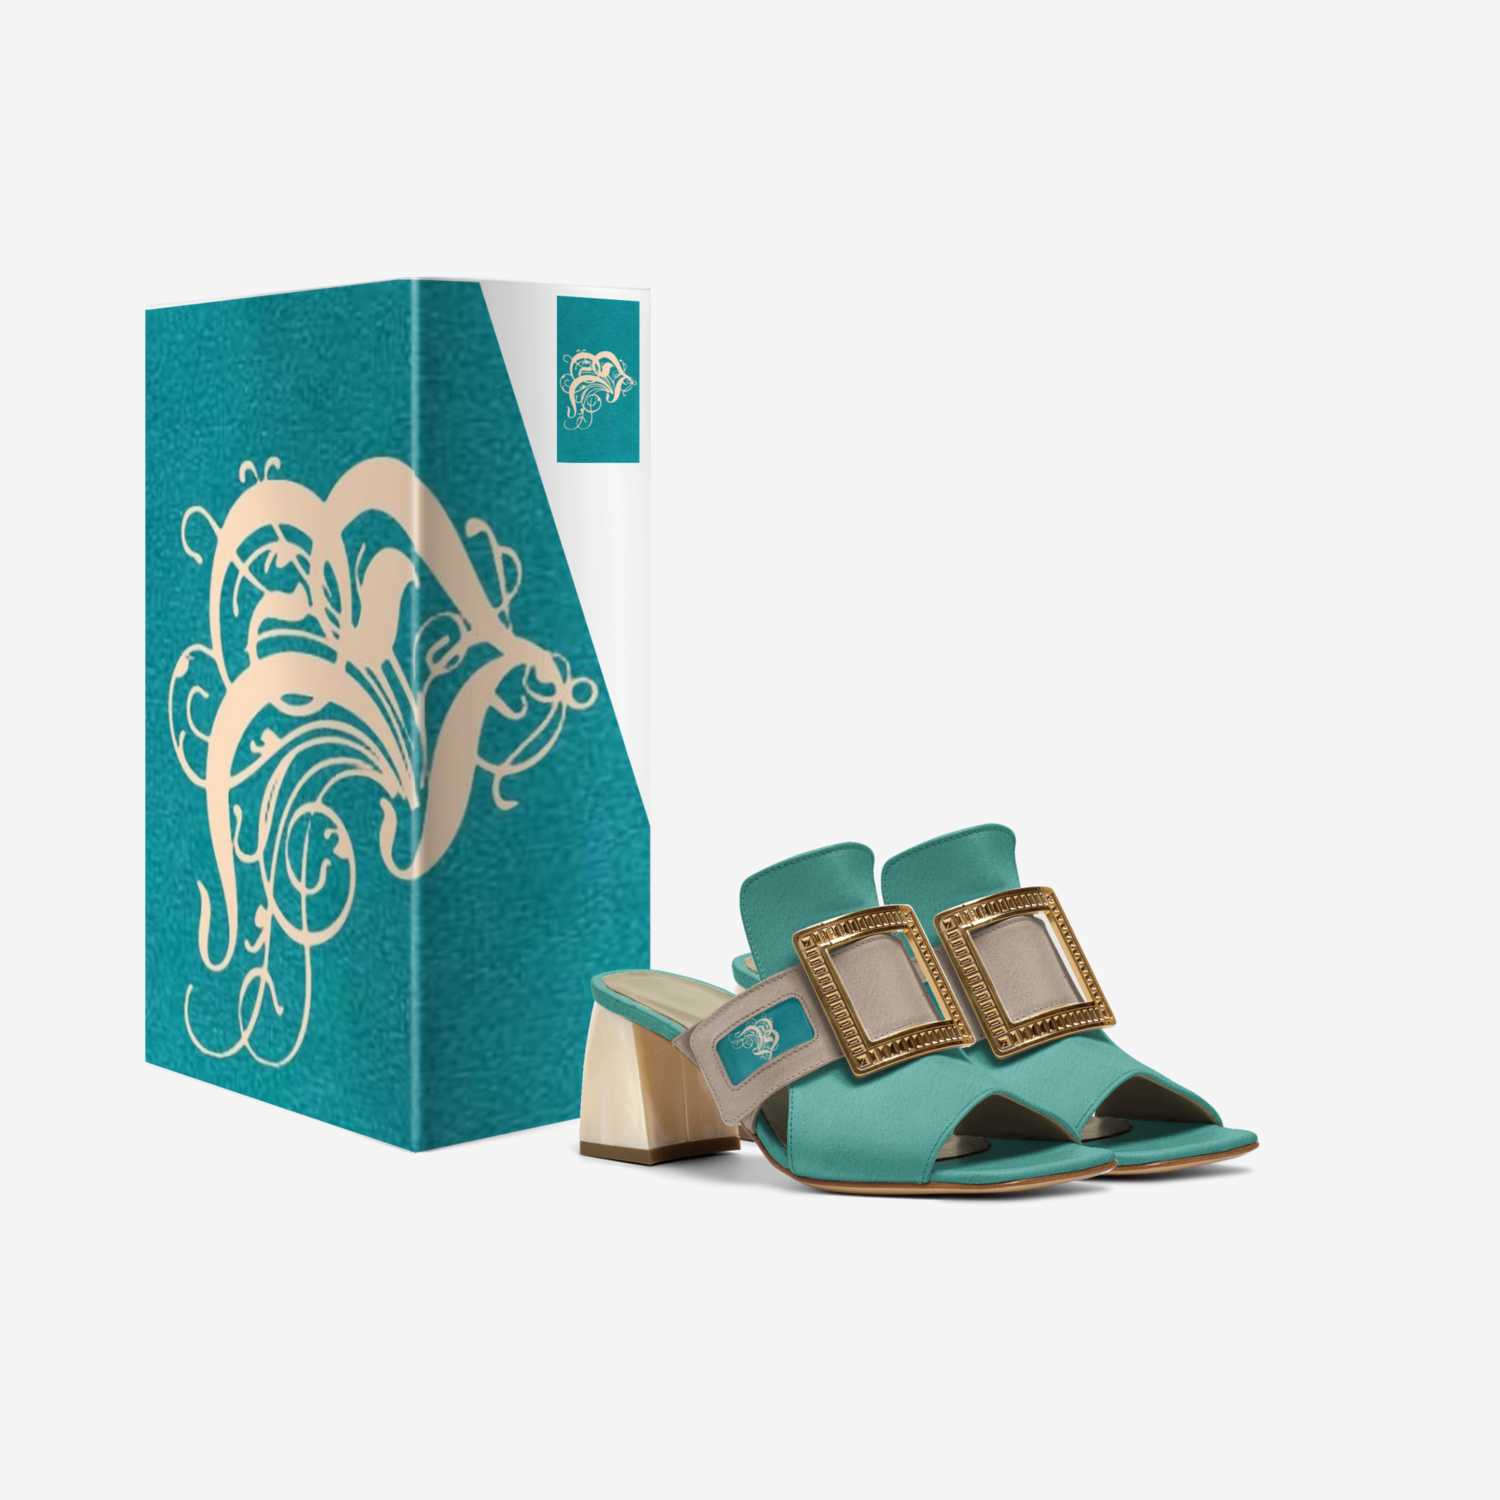 Aphrodite-Aquatic custom made in Italy shoes by Garrett Berlier | Box view